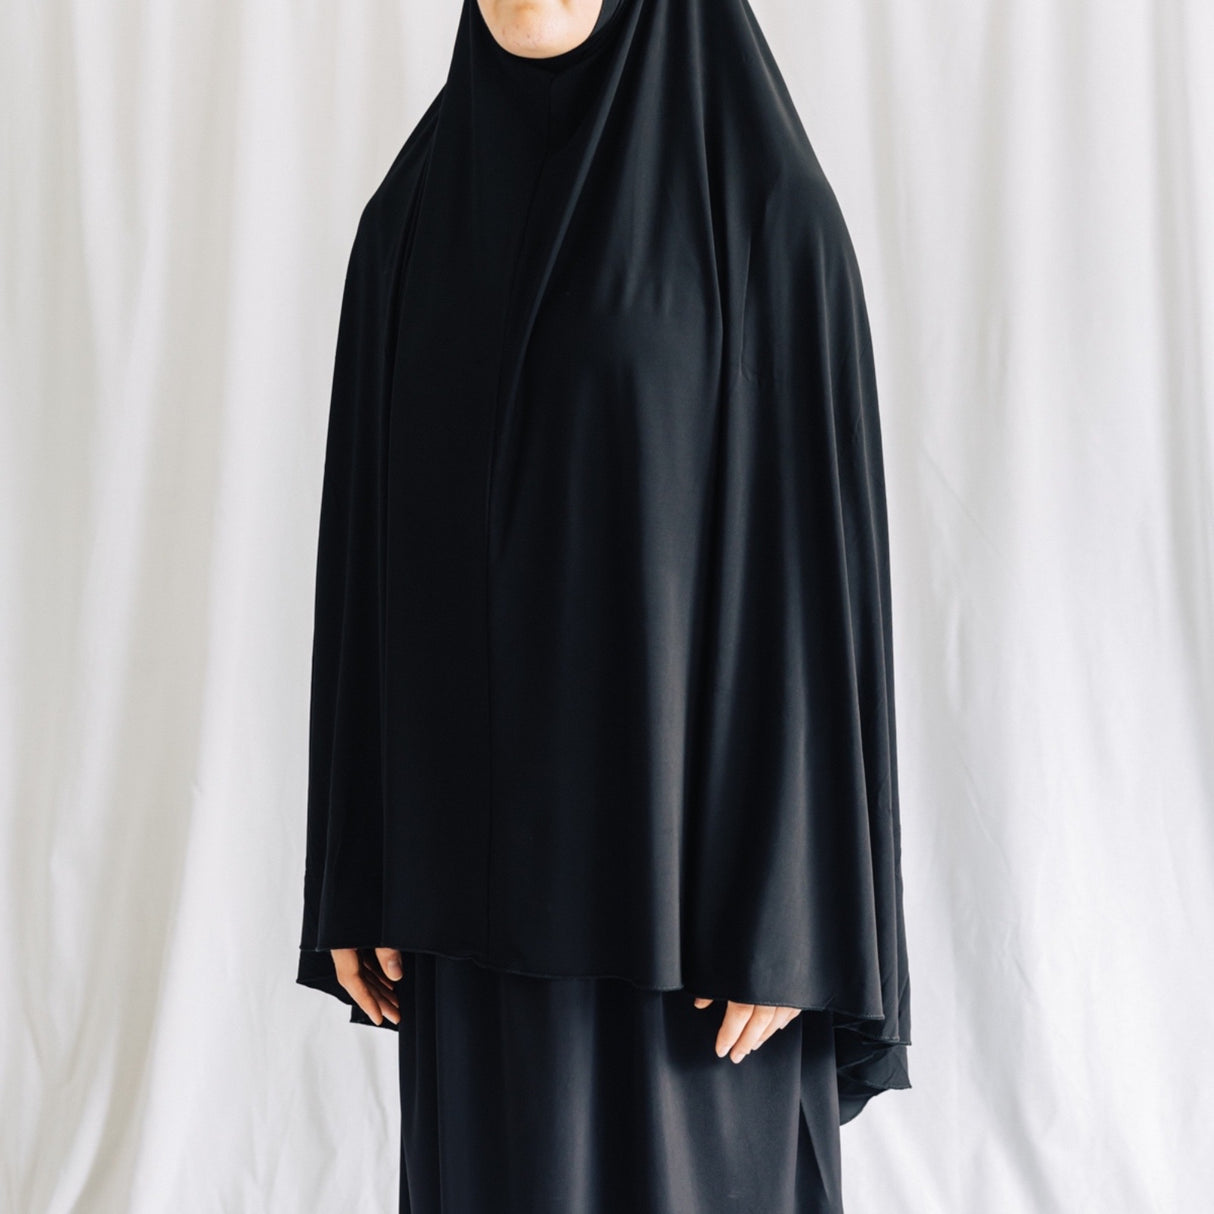 Premium Jilbab Black